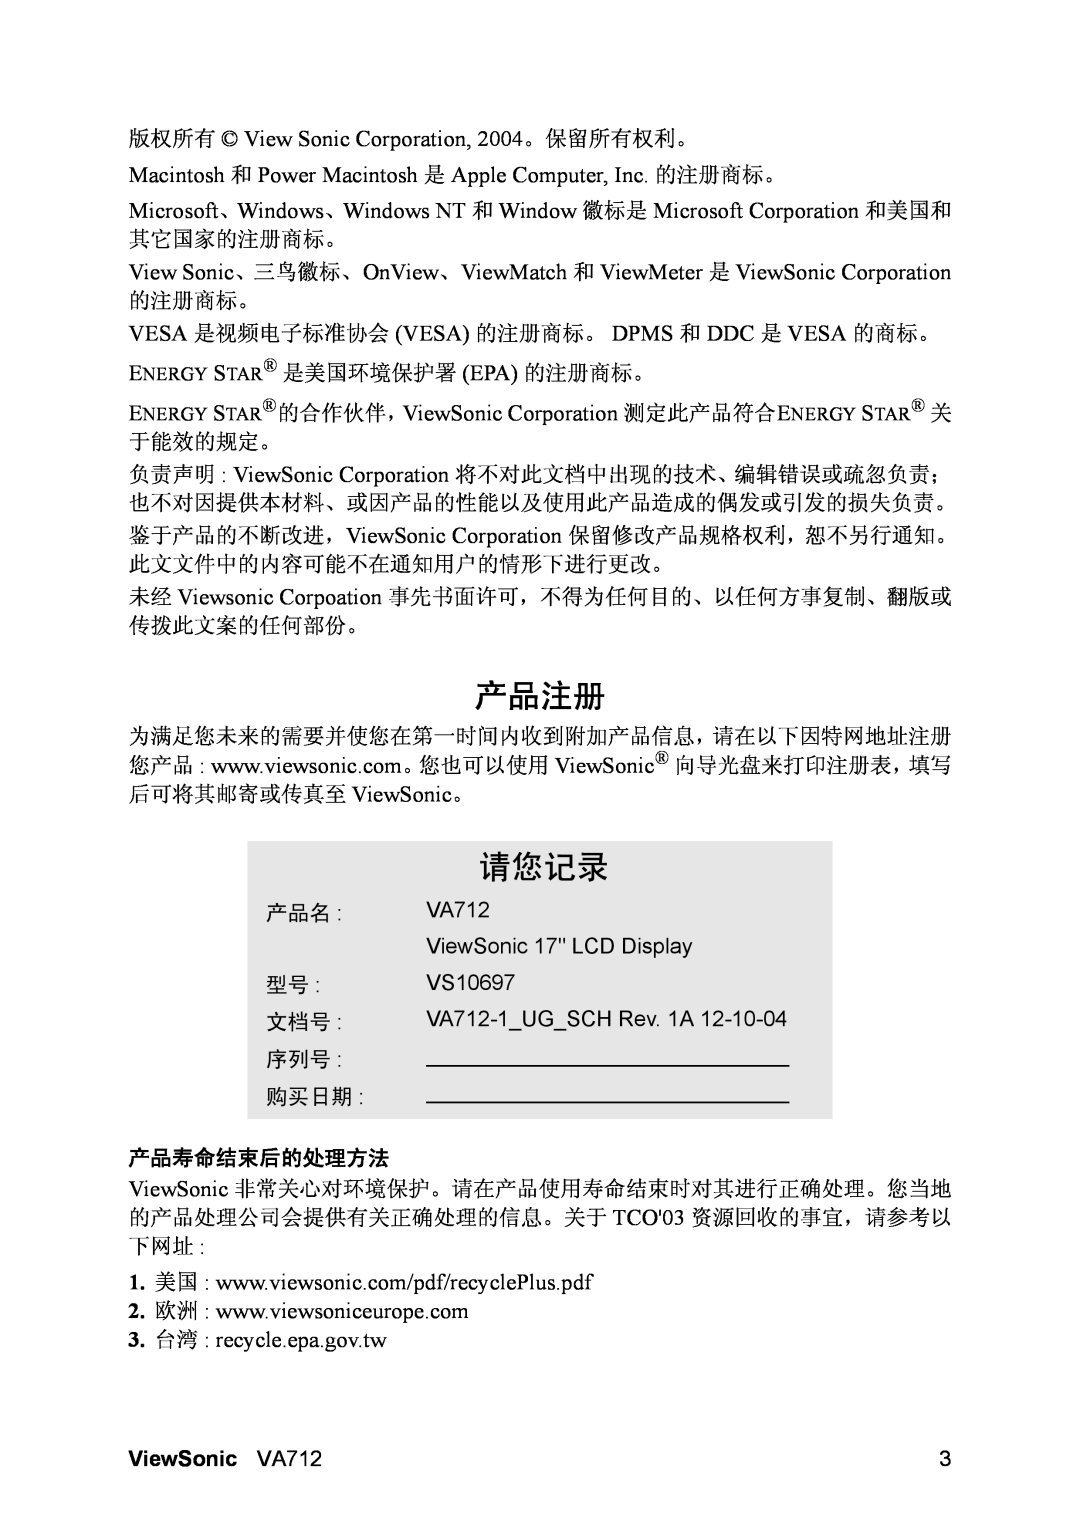 ViewSonic VS10697 manual 产品注册, 请您记录, 3.台湾 recycle.epa.gov.tw, 产品寿命结束后的处理方法, ViewSonic VA712 